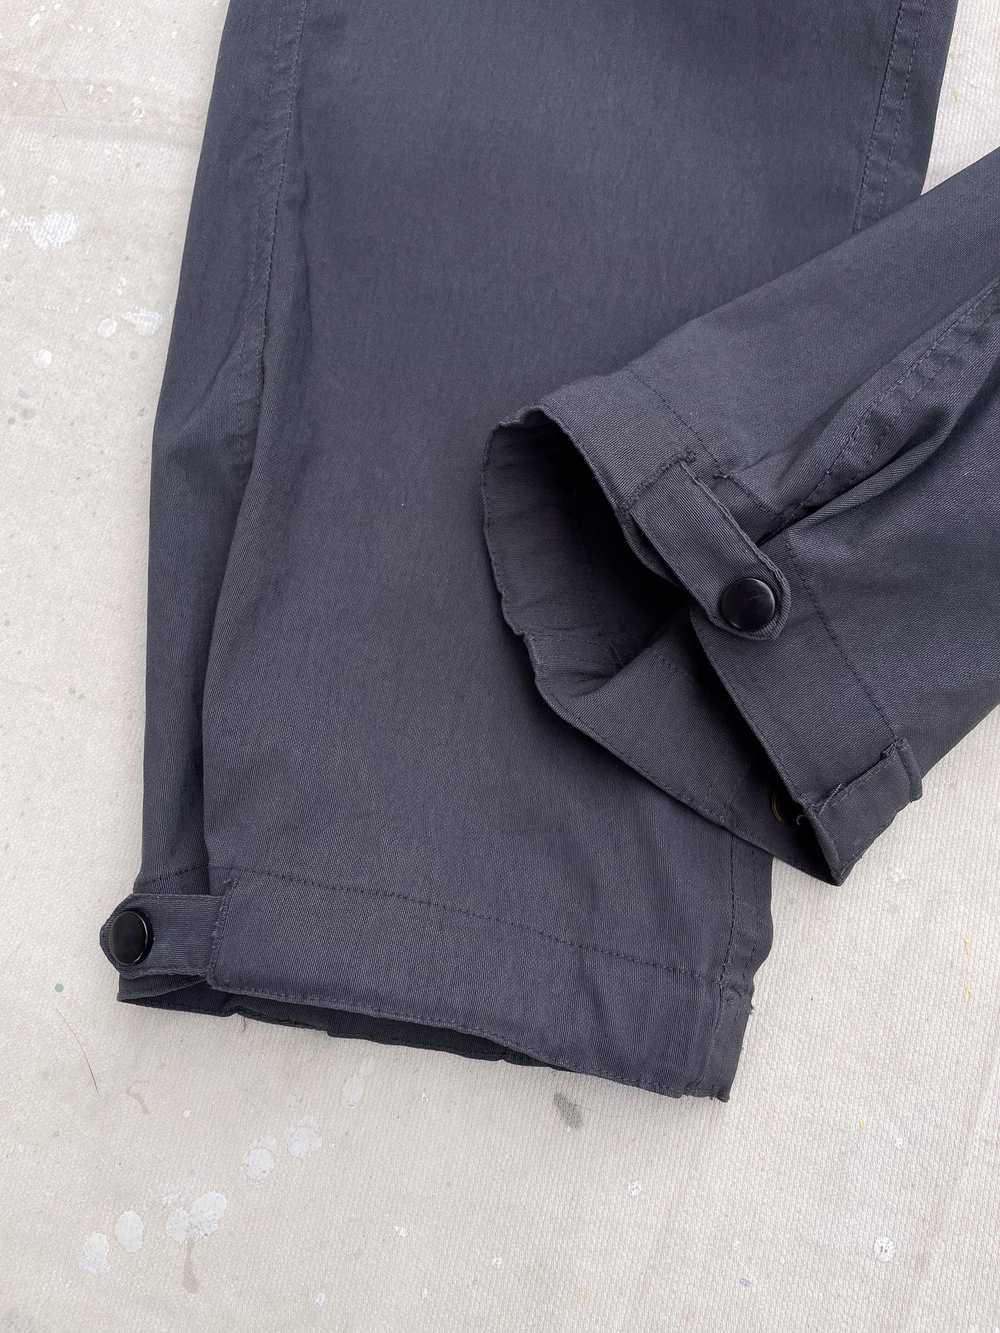 Isis Full Crotch Zip Tech Pants—[28x31] - image 6